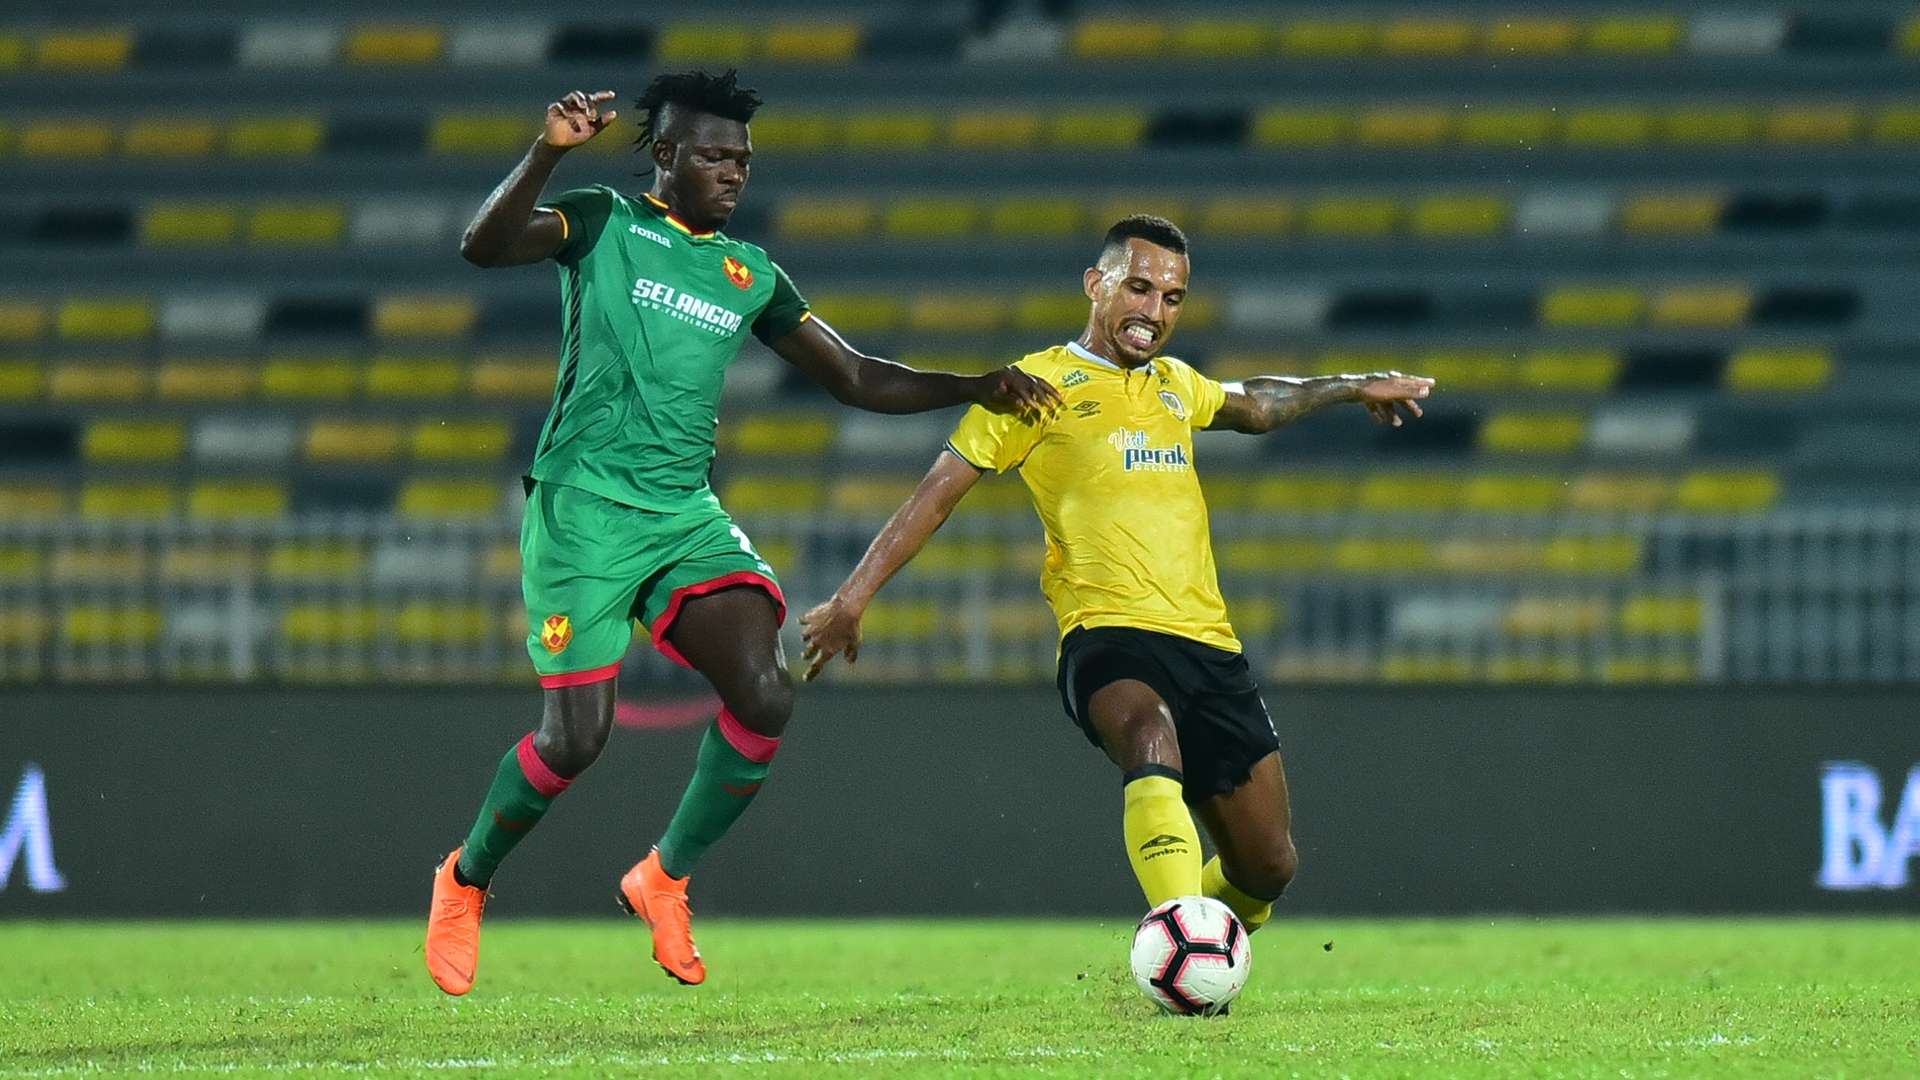 Leandro dos Santos, Perak v Selangor, Malaysia Super League, 10 Jul 2019